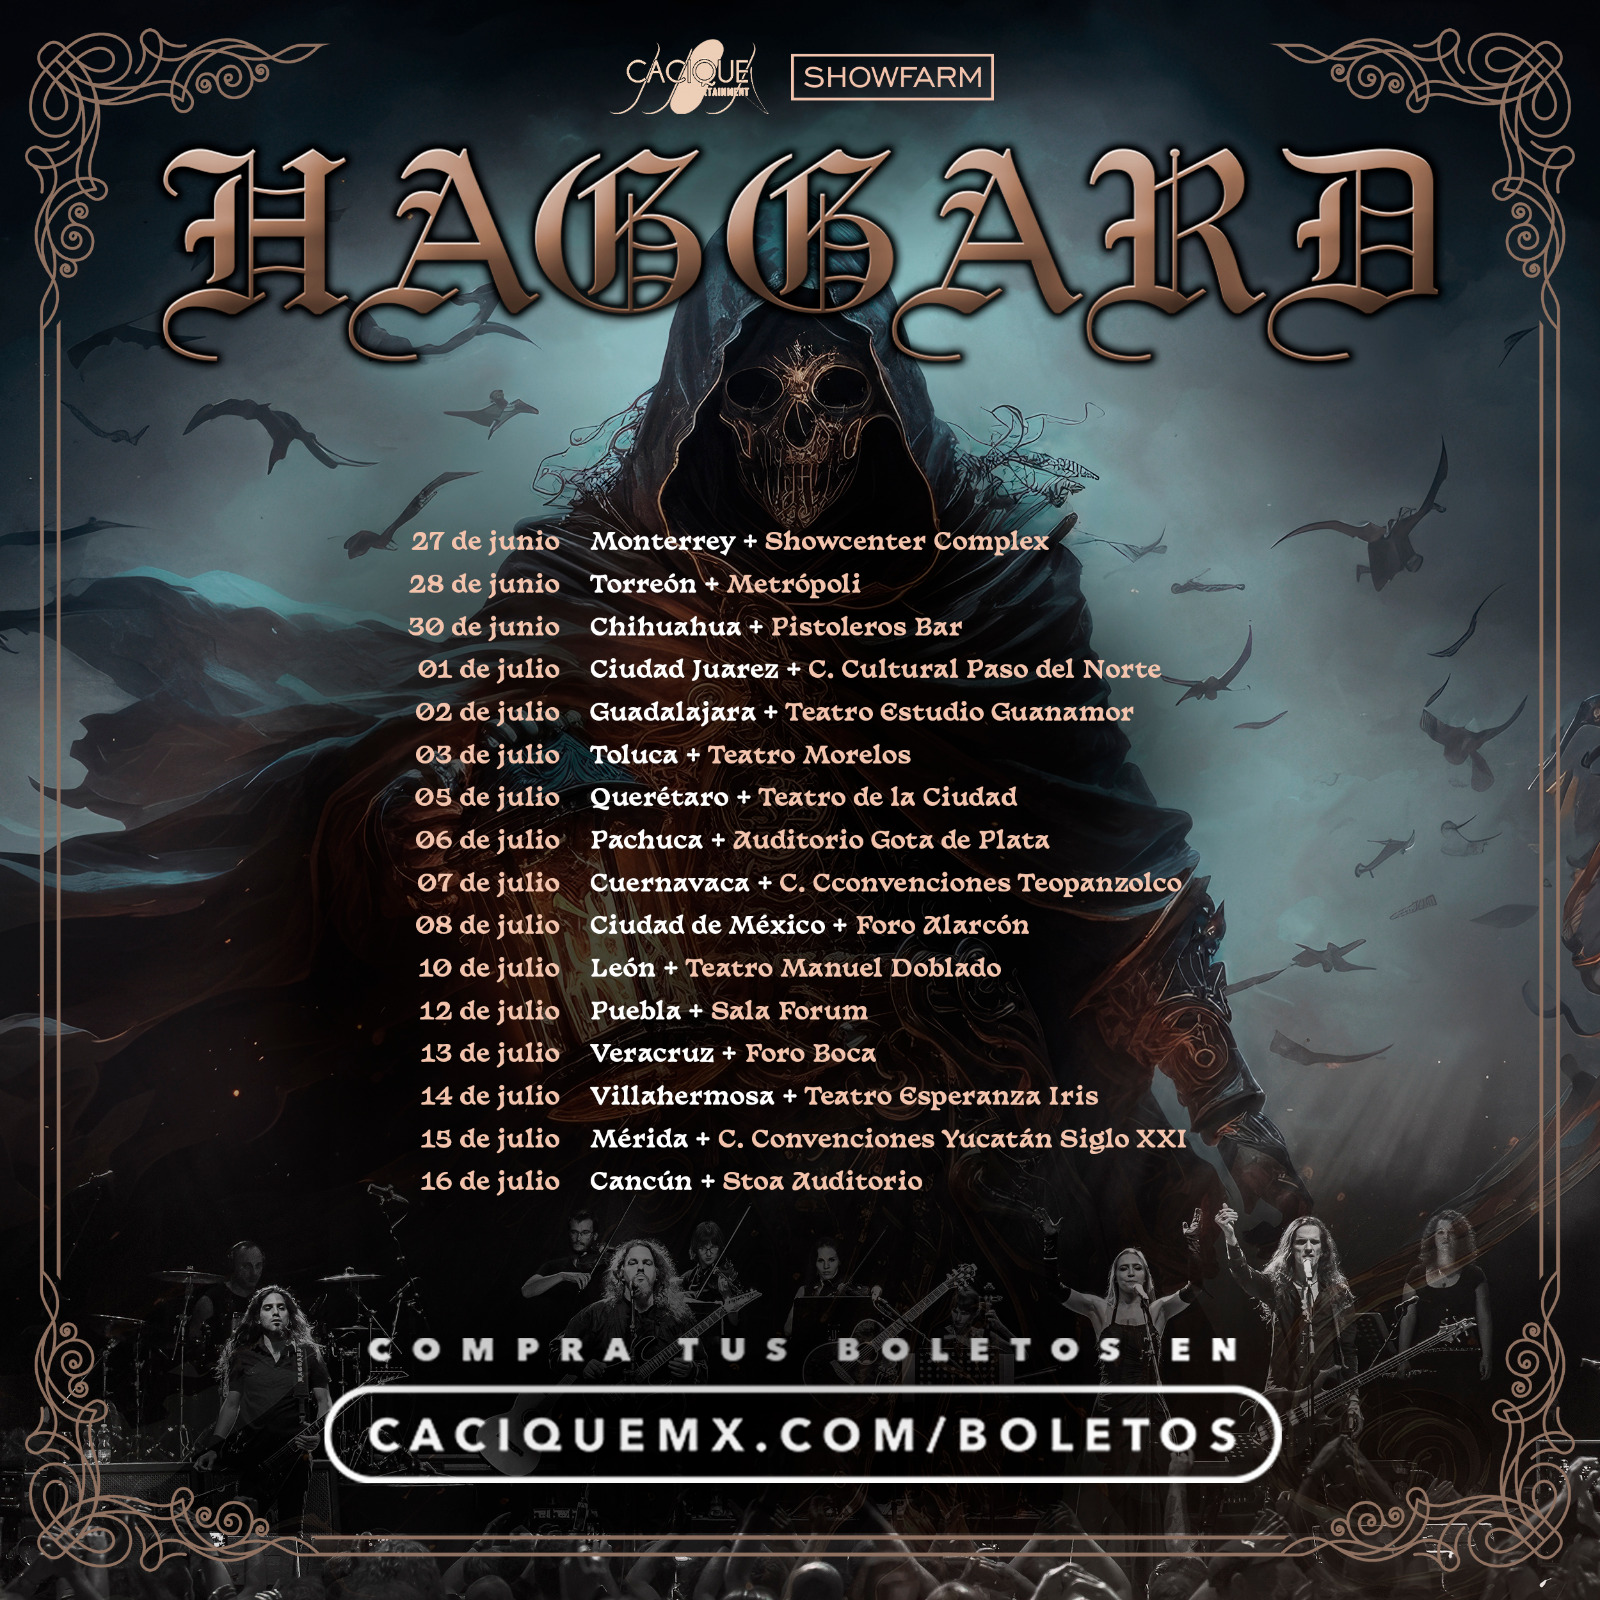 Haggard anuncia extensa gira por nuestro país